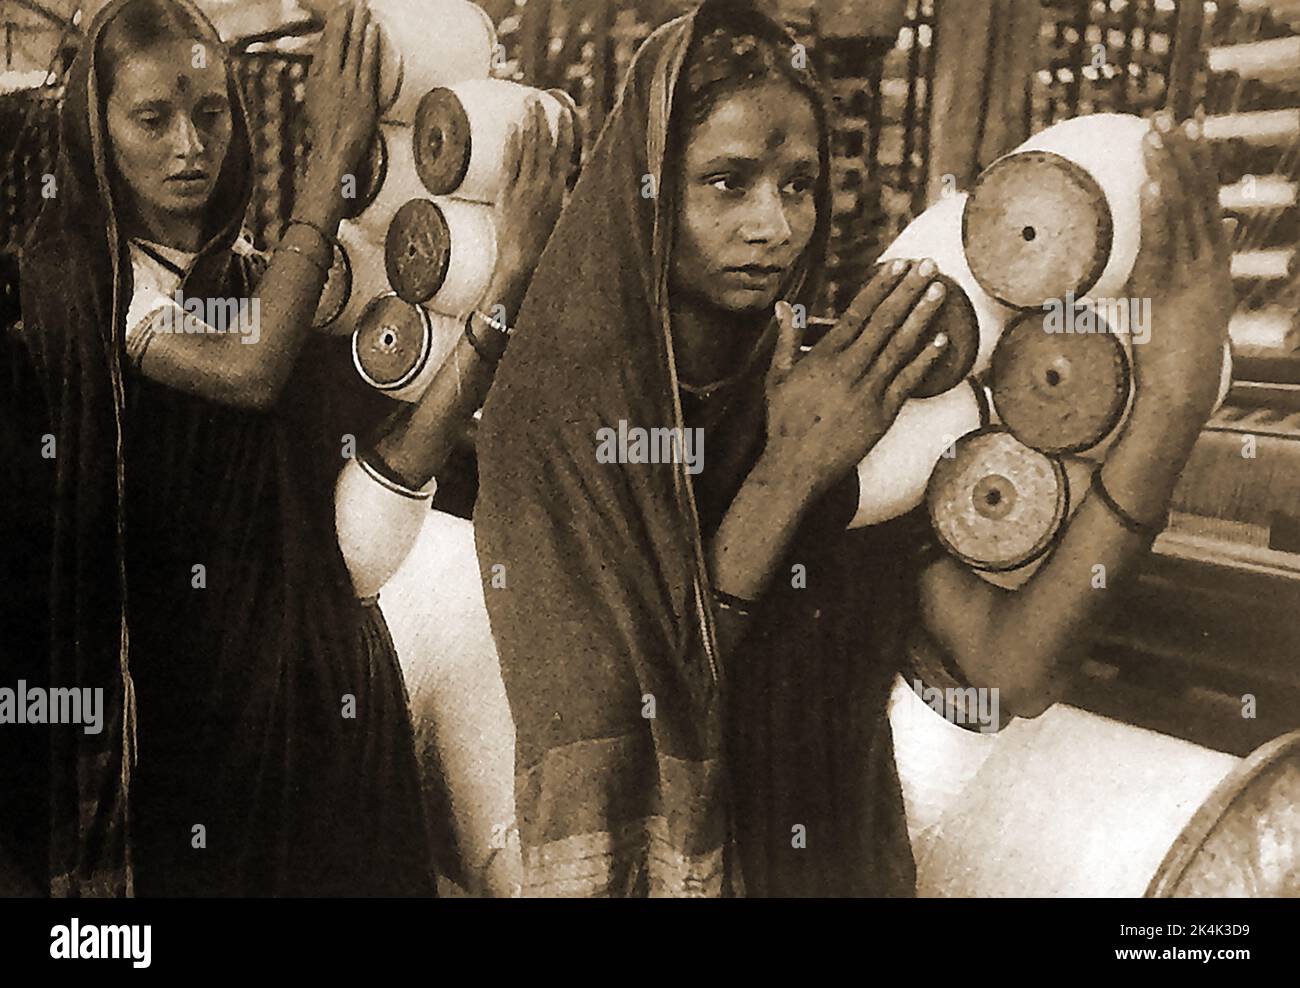 1940's (Post War) Indian workers carry bobbins in a cotton mill in Bombay (now Mumbai).  ----    ۱۹۴۰ کی دہائی (جنگ کے بعد) بمبئی (اب ممبئی) کی ایک کاٹن مل میں ہندوستانی مزدور بوبن لے کر جا رہے ہیں۔   -------    1940 के दशक (युद्ध के बाद) भारतीय श्रमिक बॉम्बे (अब मुंबई) में एक कपास मिल में बोबिन ले जाते हैं। Stock Photo